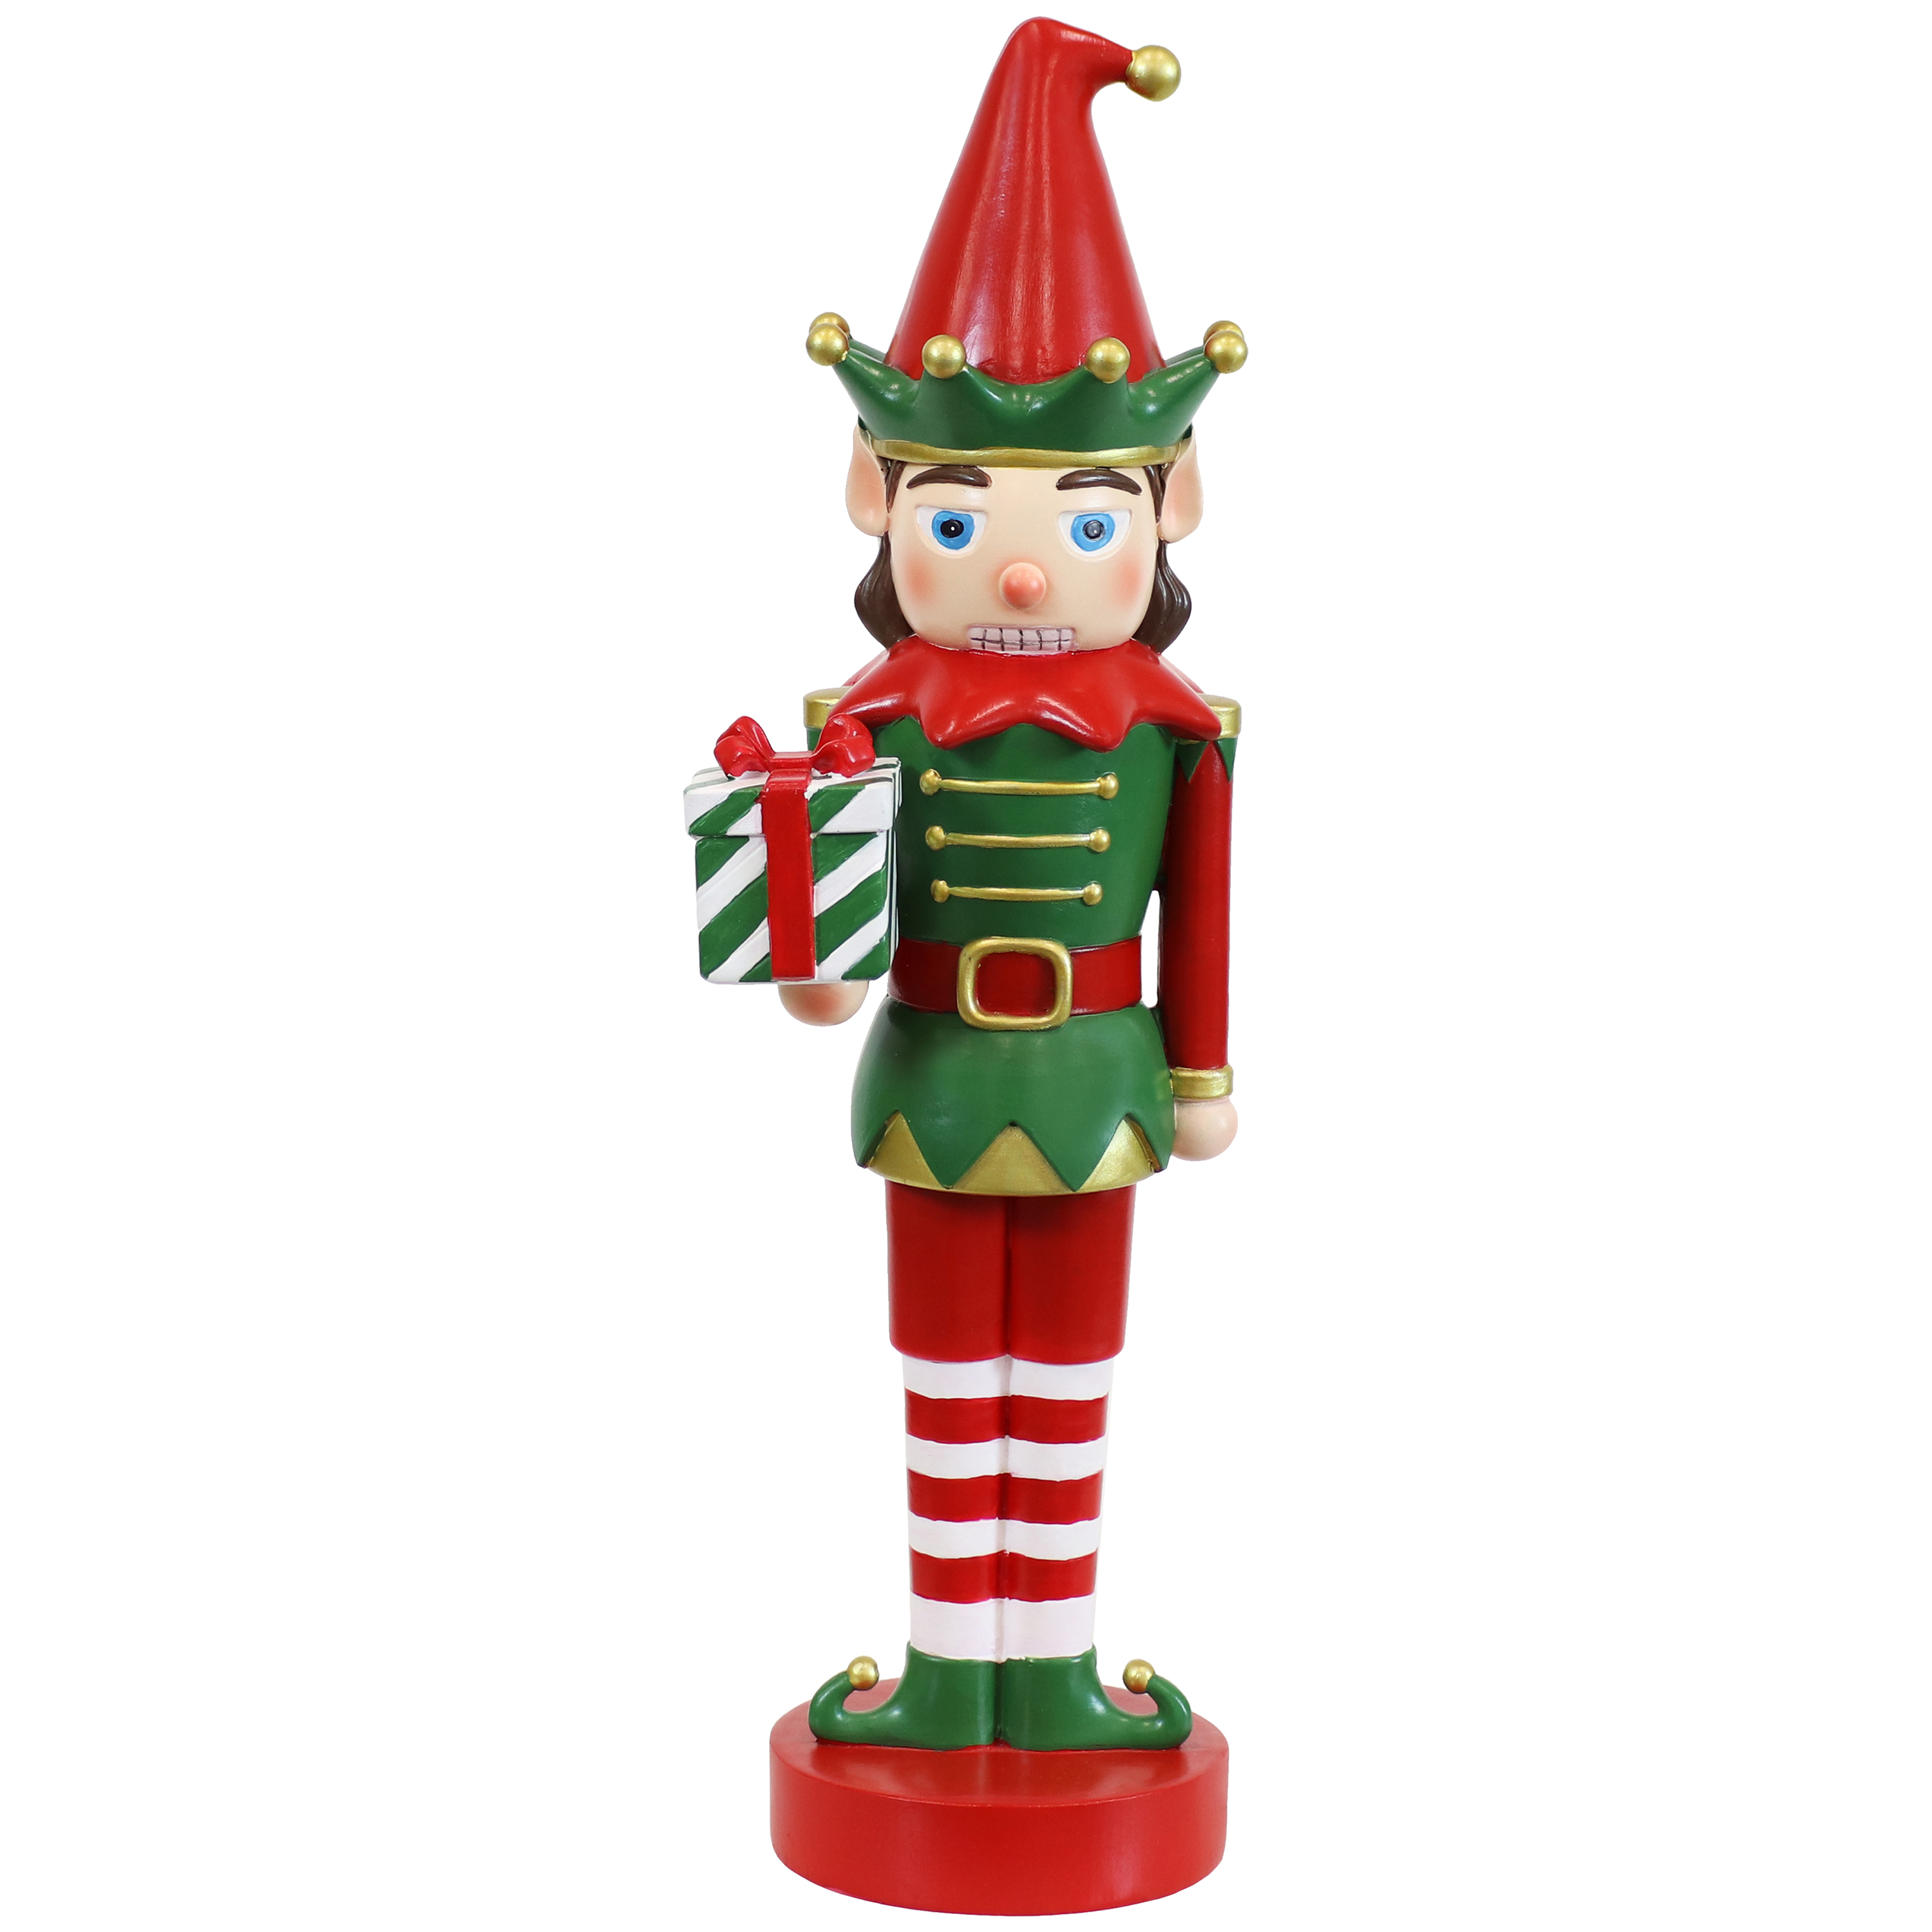 Jingles the Nutcracker Christmas Elf Statue - 17-Inch